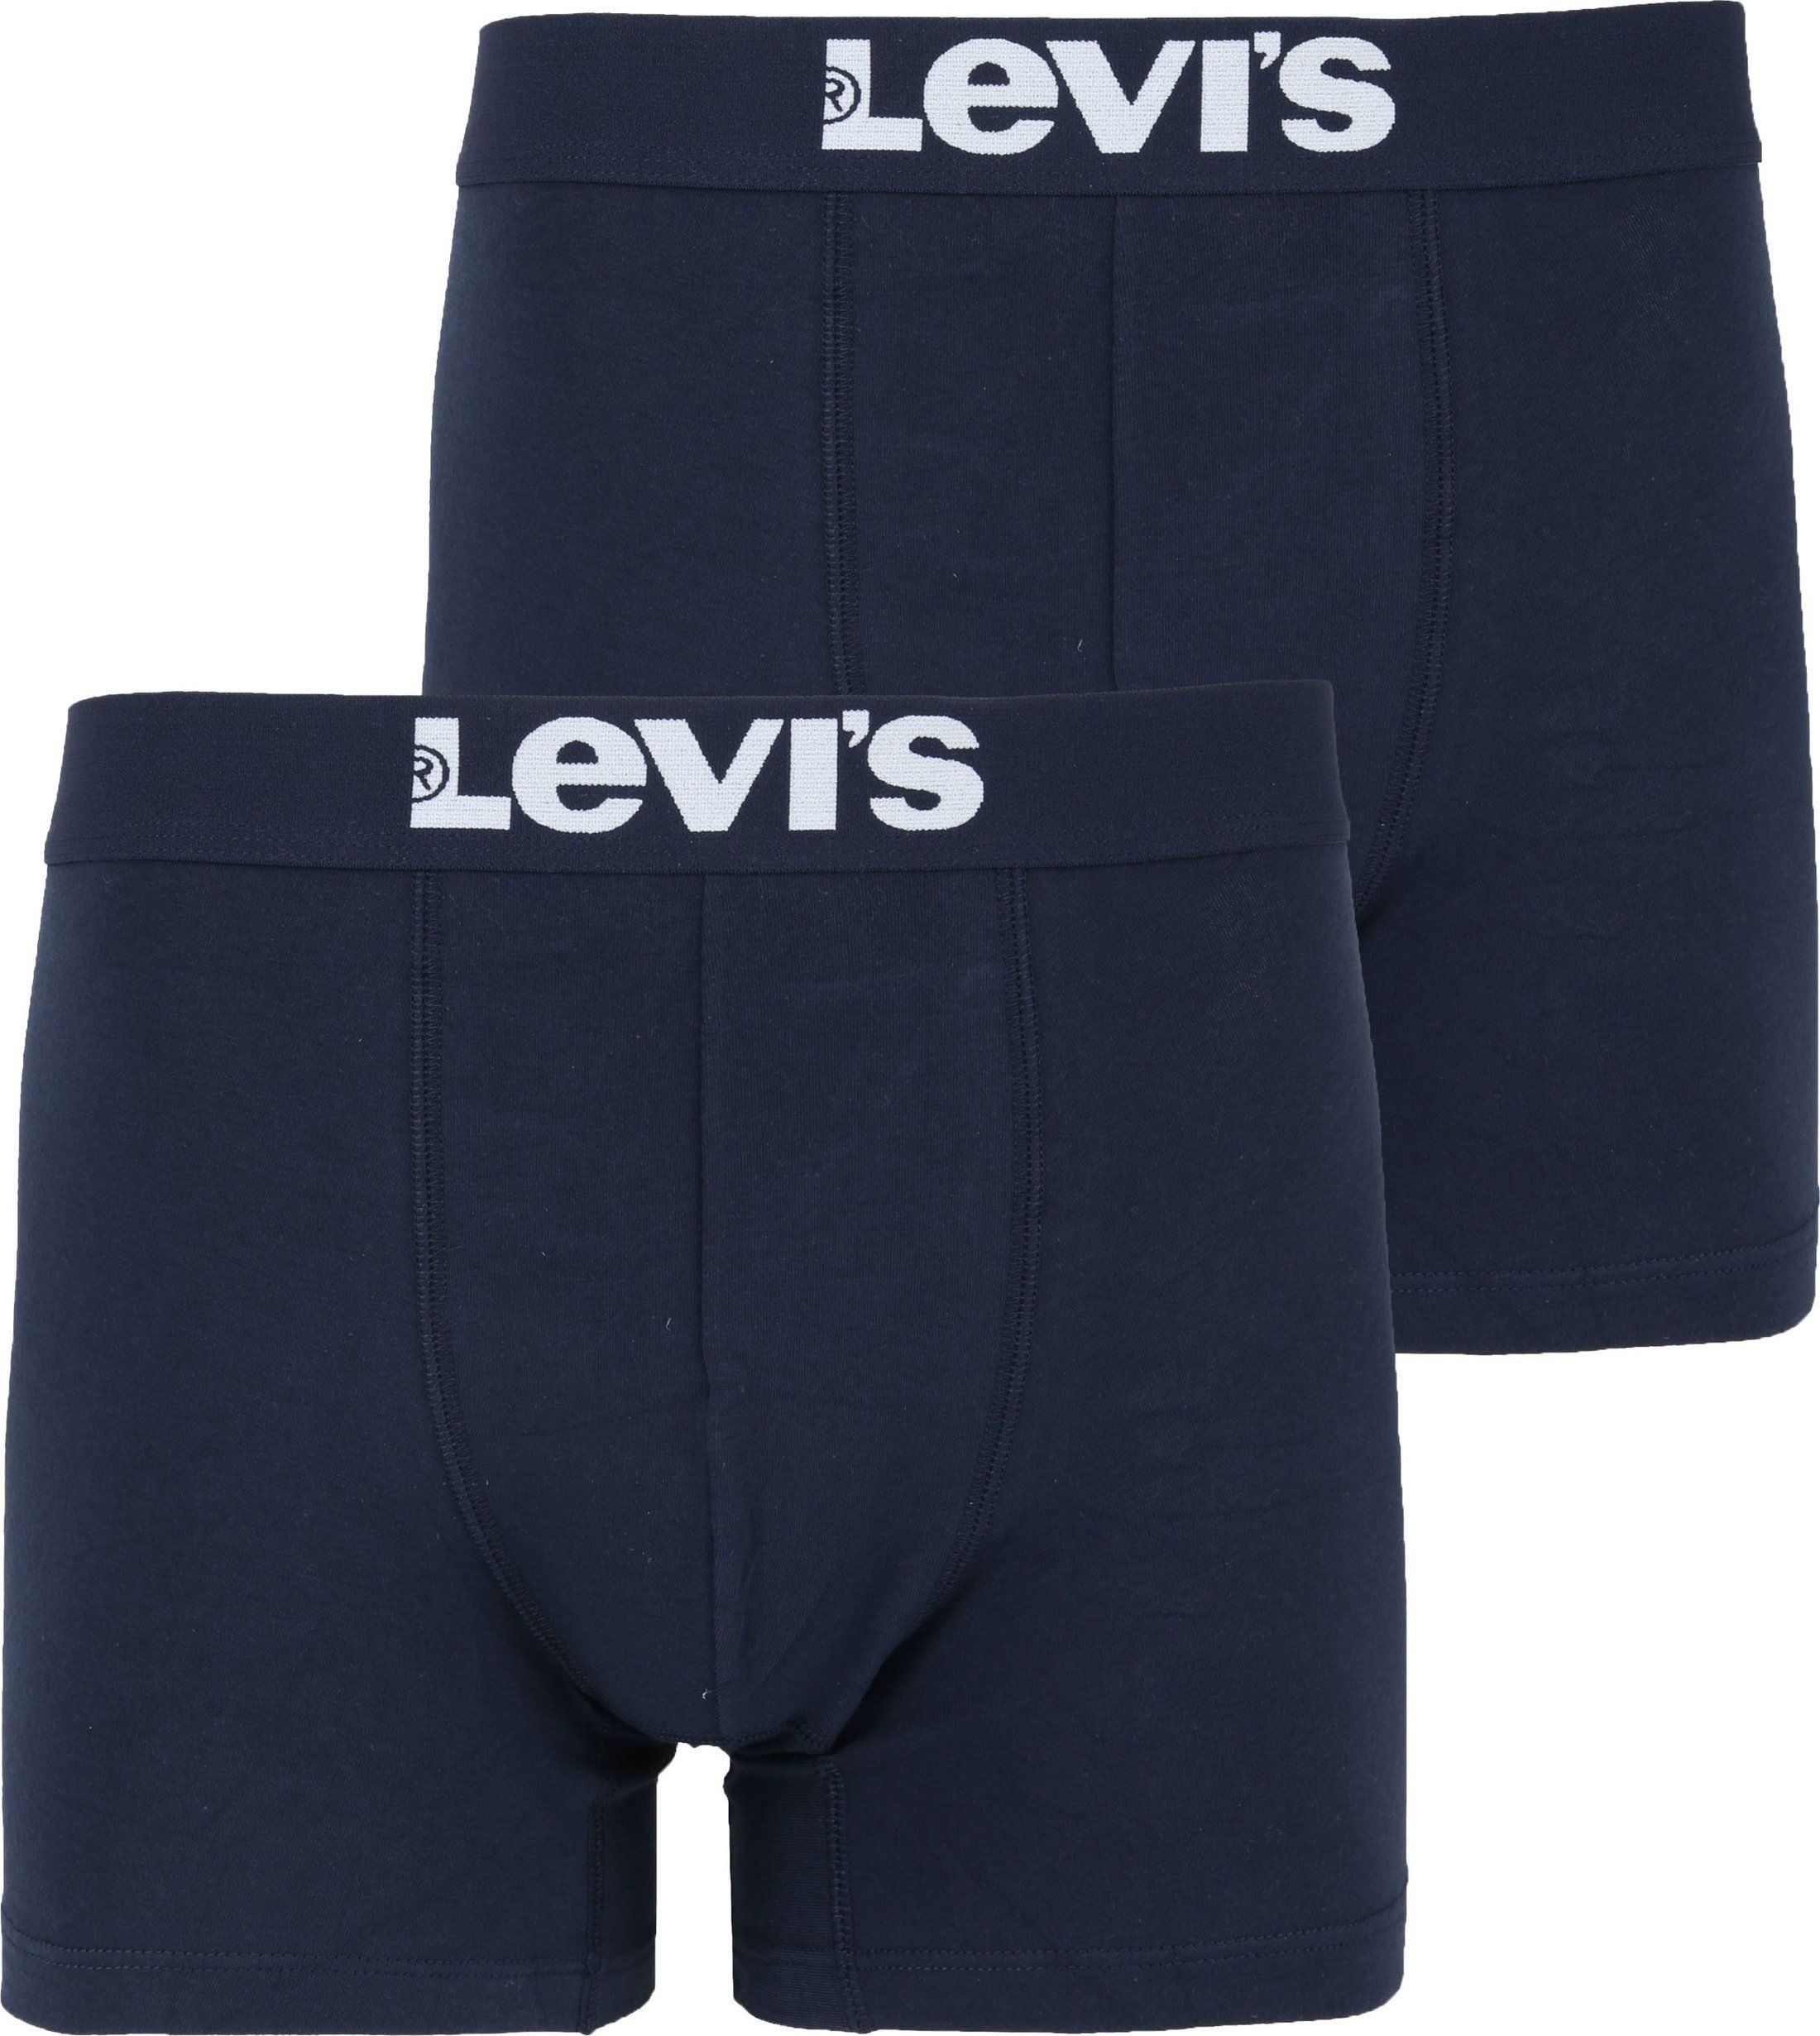 Levi's Boxer Shorts 2-Pack Navy Dark Blue Blue size L